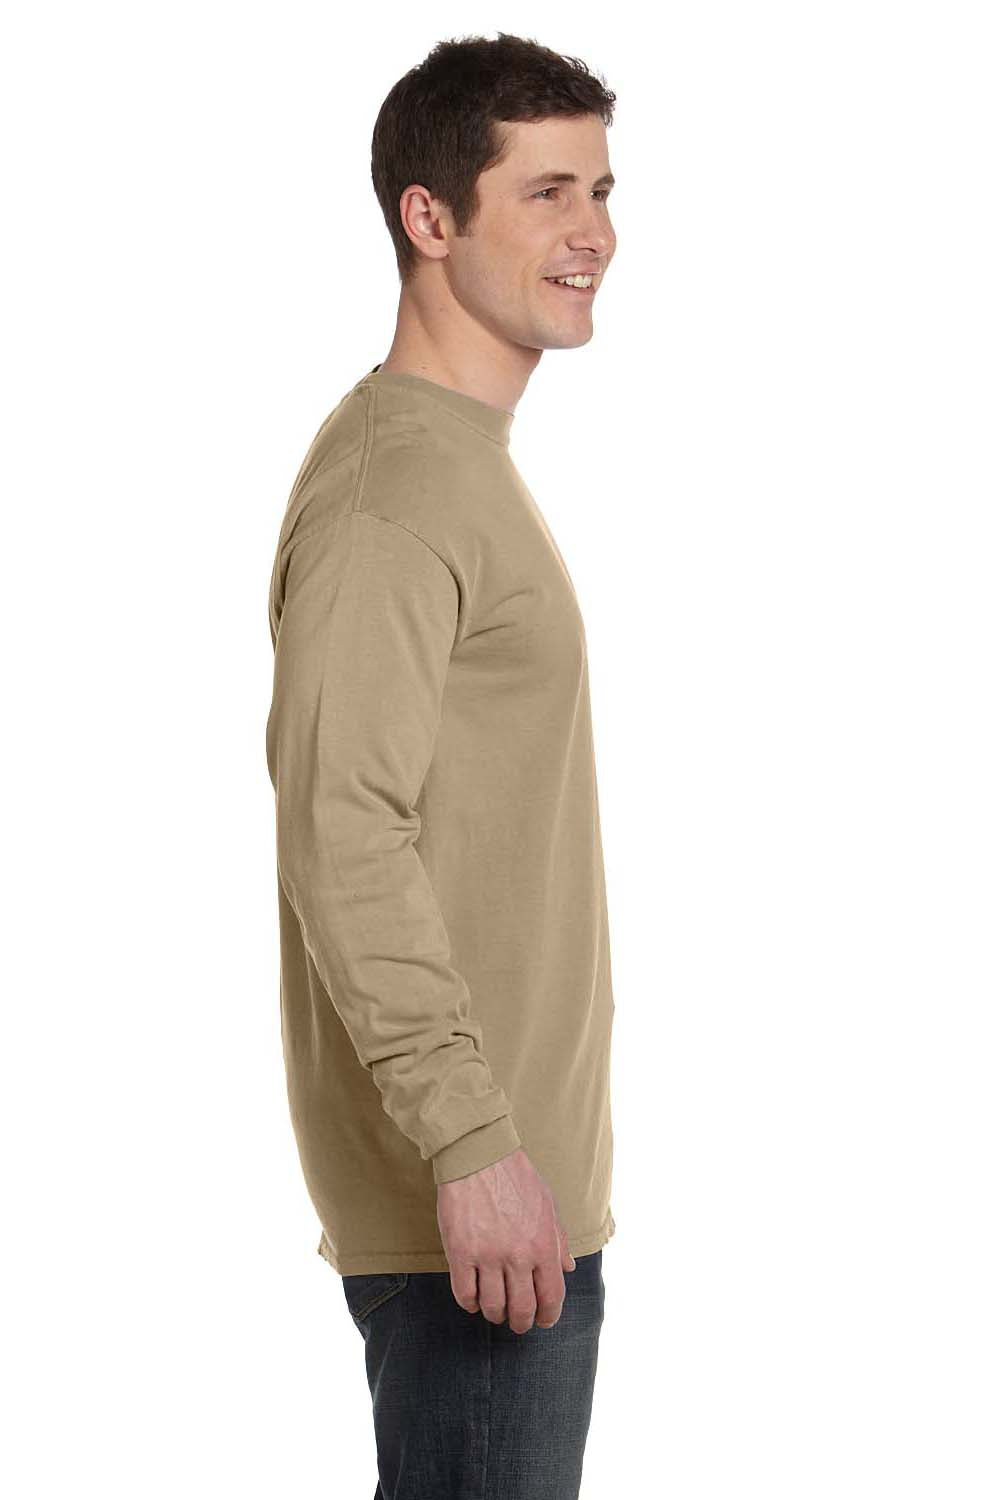 Comfort Colors C6014 Mens Long Sleeve Crewneck T-Shirt Khaki Brown Side